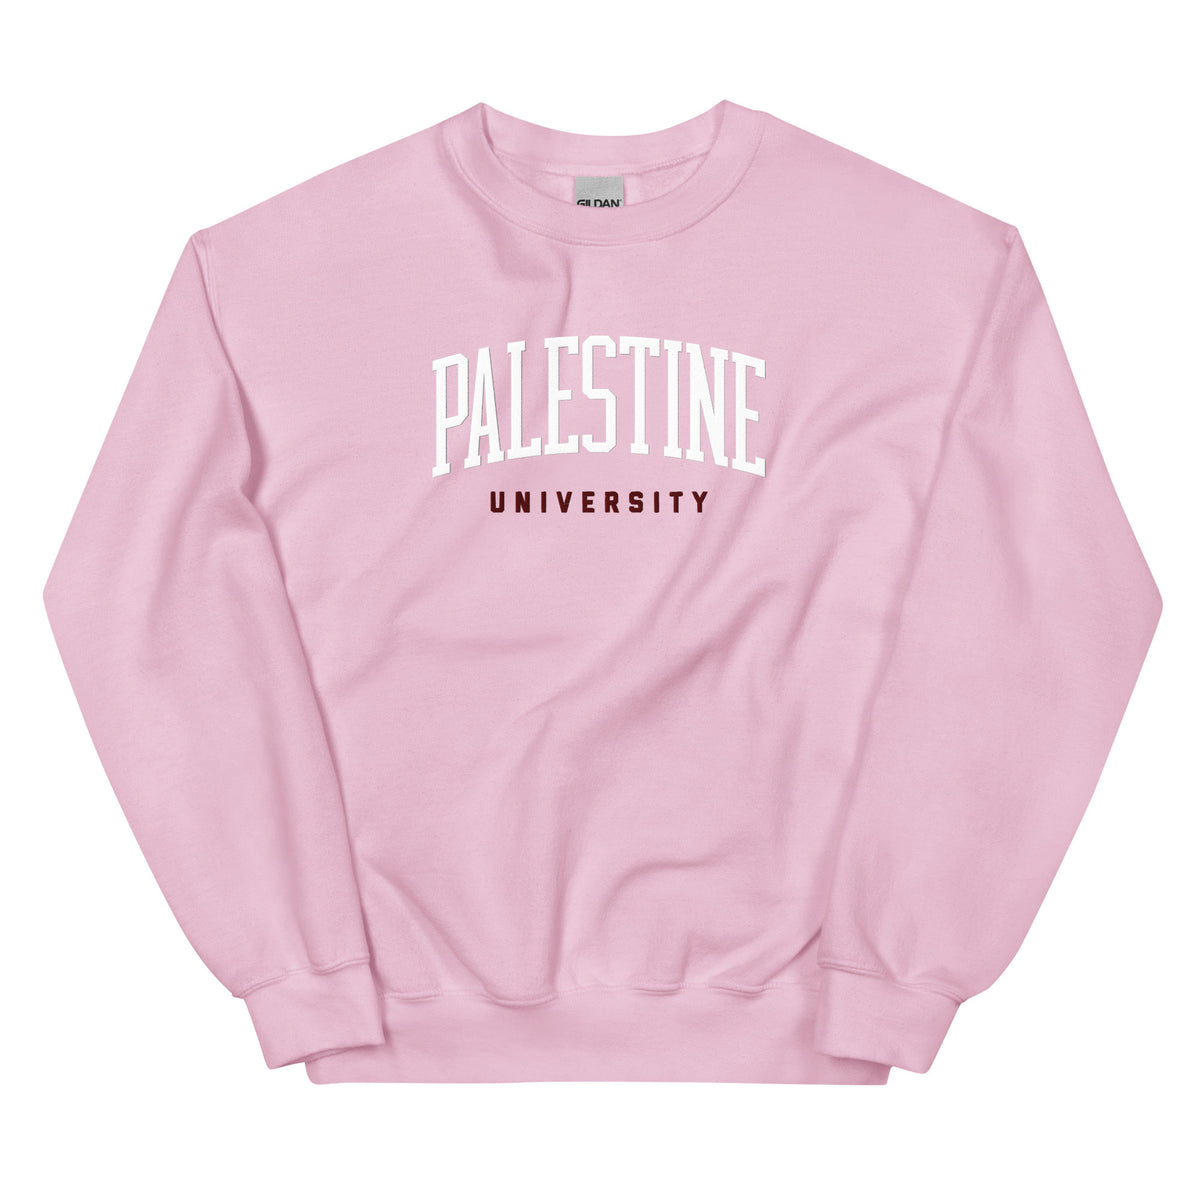 Palestine university sweatshirt in pink by Dar Collective